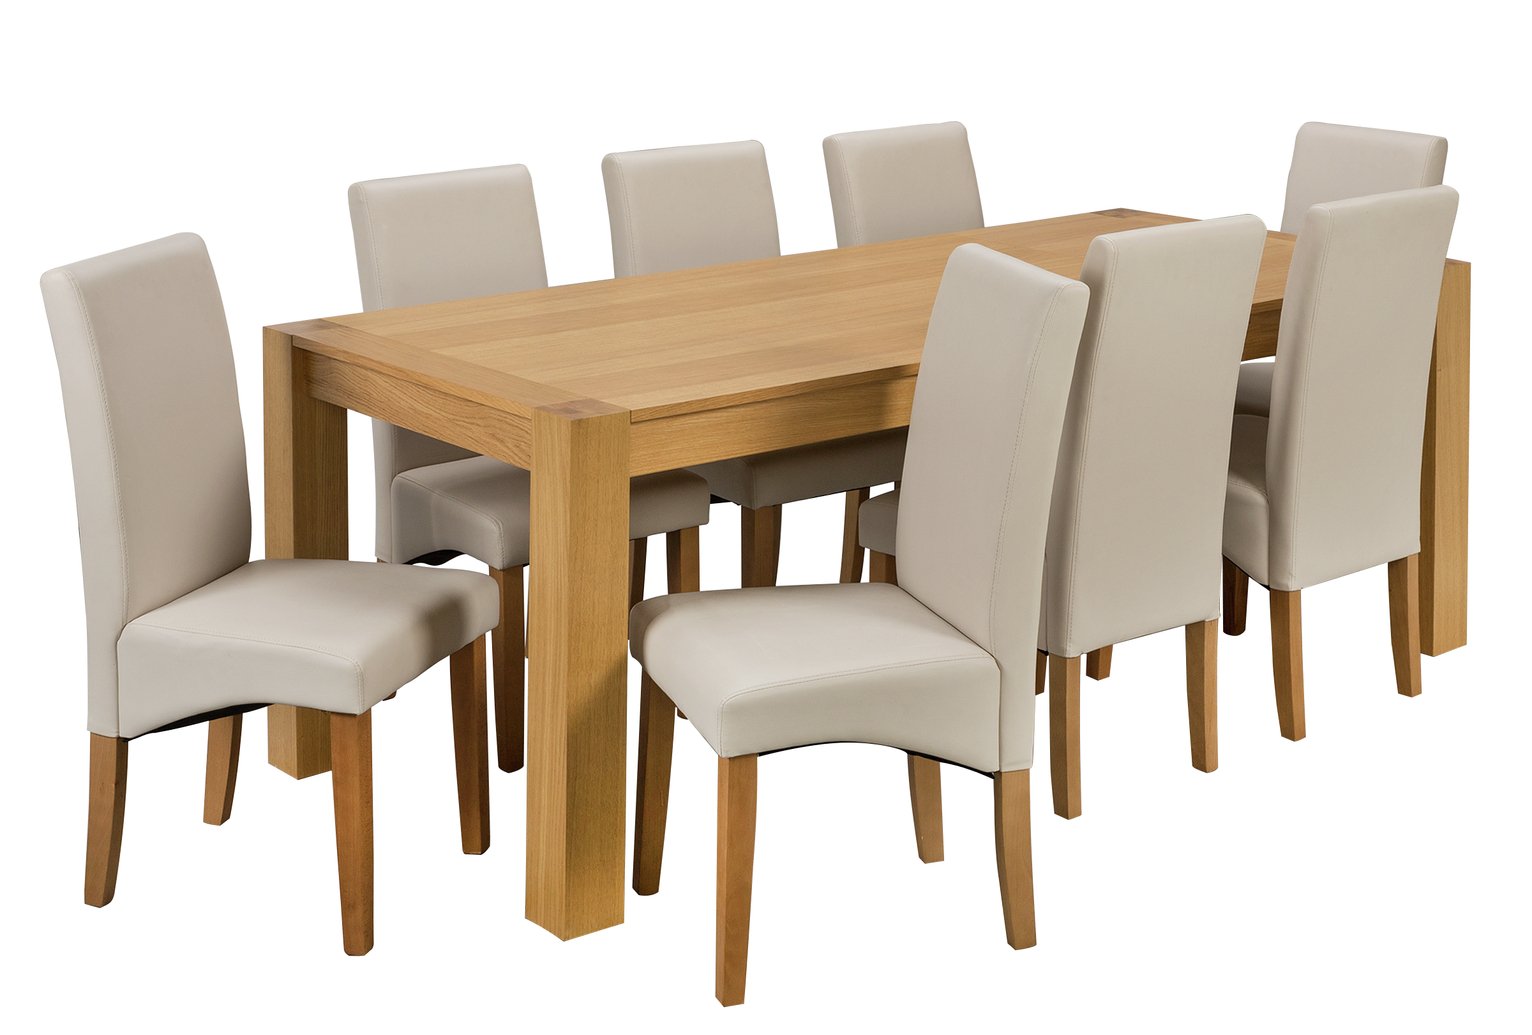 Argos Home Alston Oak Veneer Table and 8 Chairs - Cream